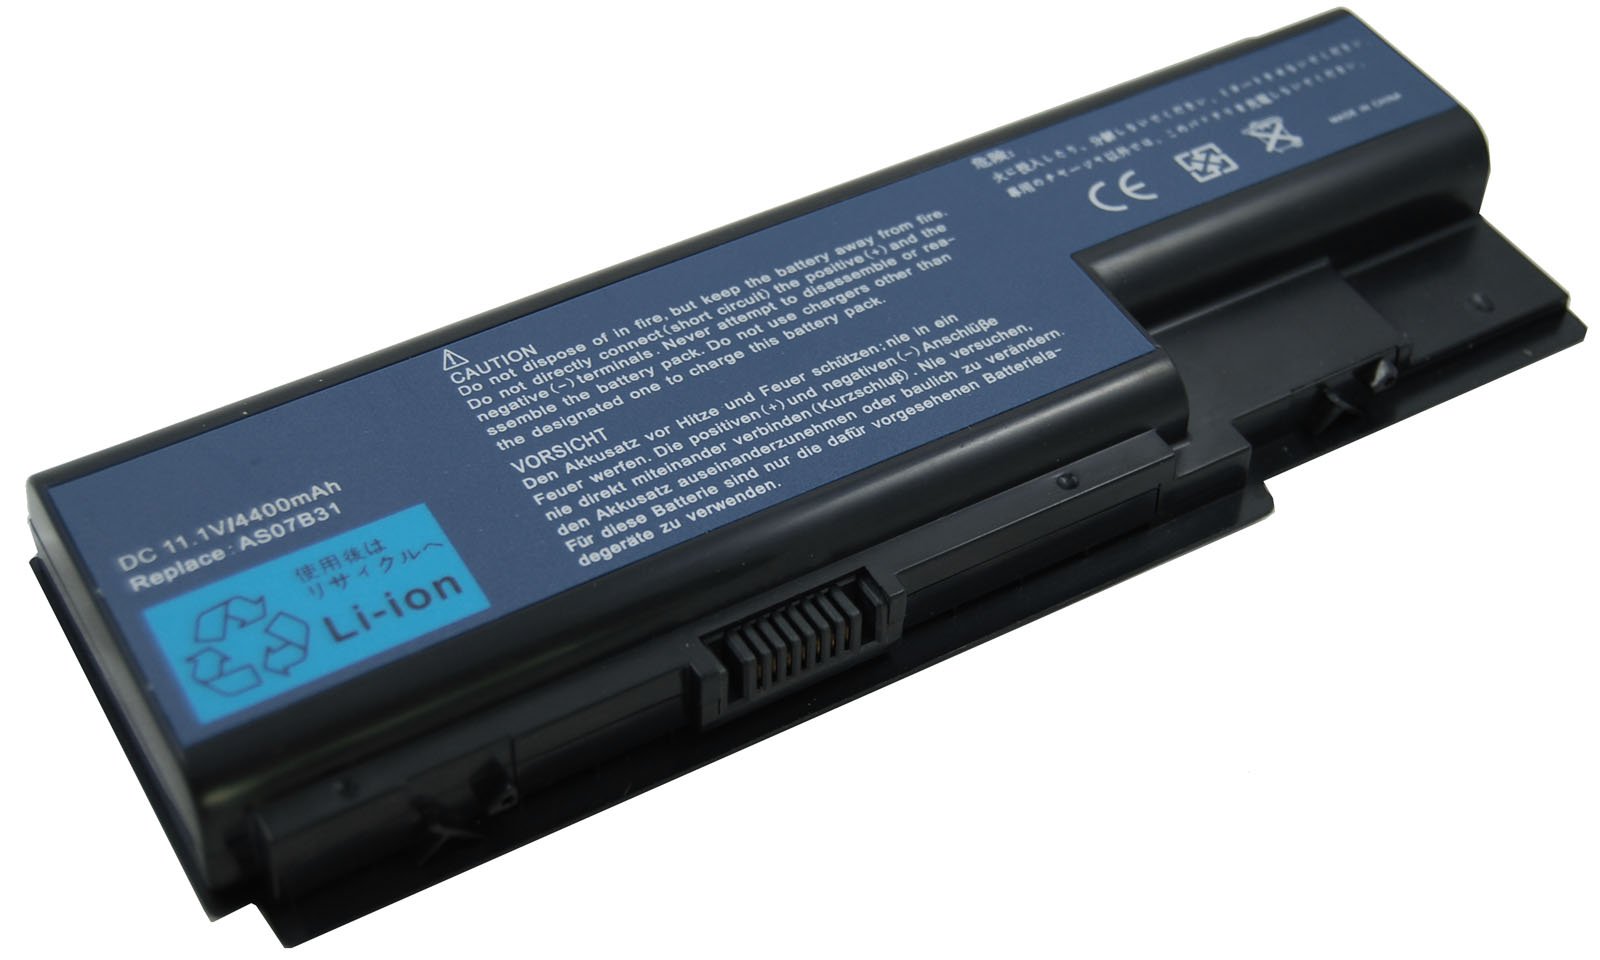 Acer Laptop battery repair/replacement